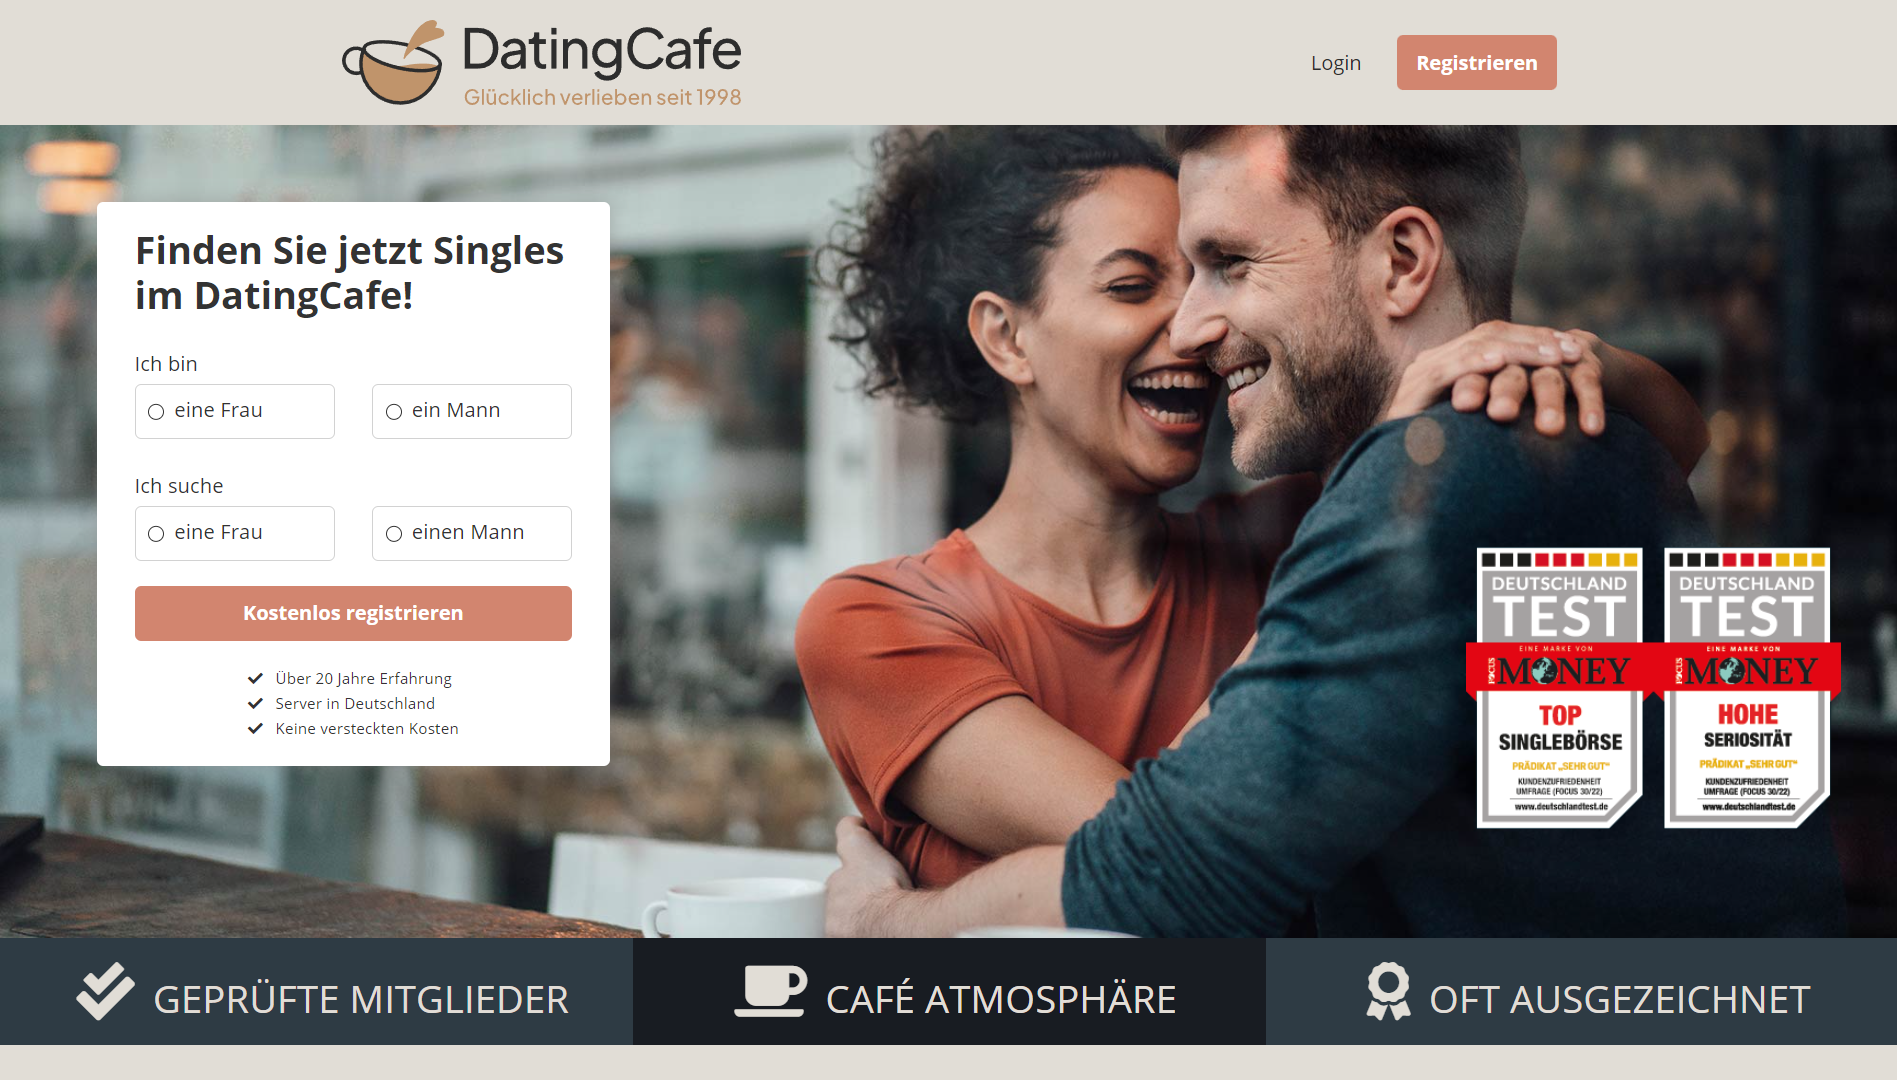 Dating Cafe Test